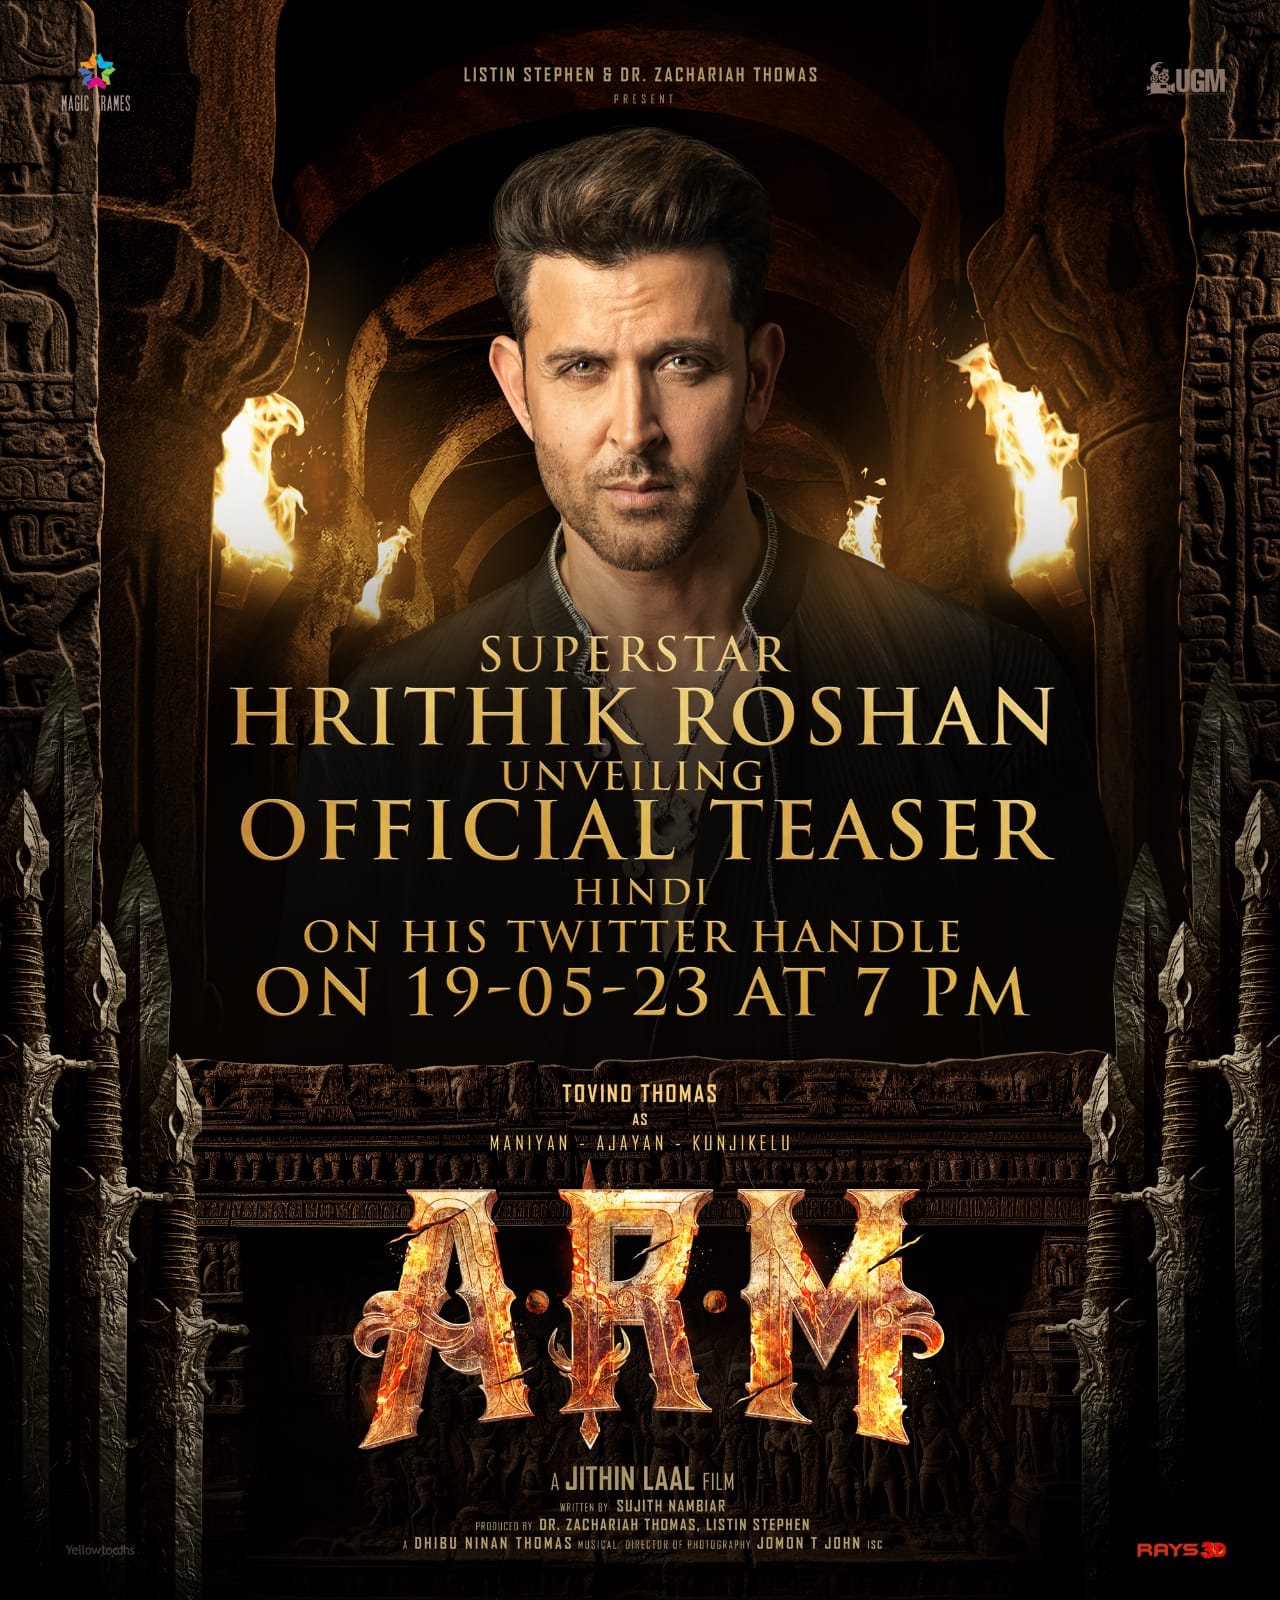 Hrithik Roshan to unveil the teaser of Tovino Thomas's pan India film Ajayante Randam Moshanam